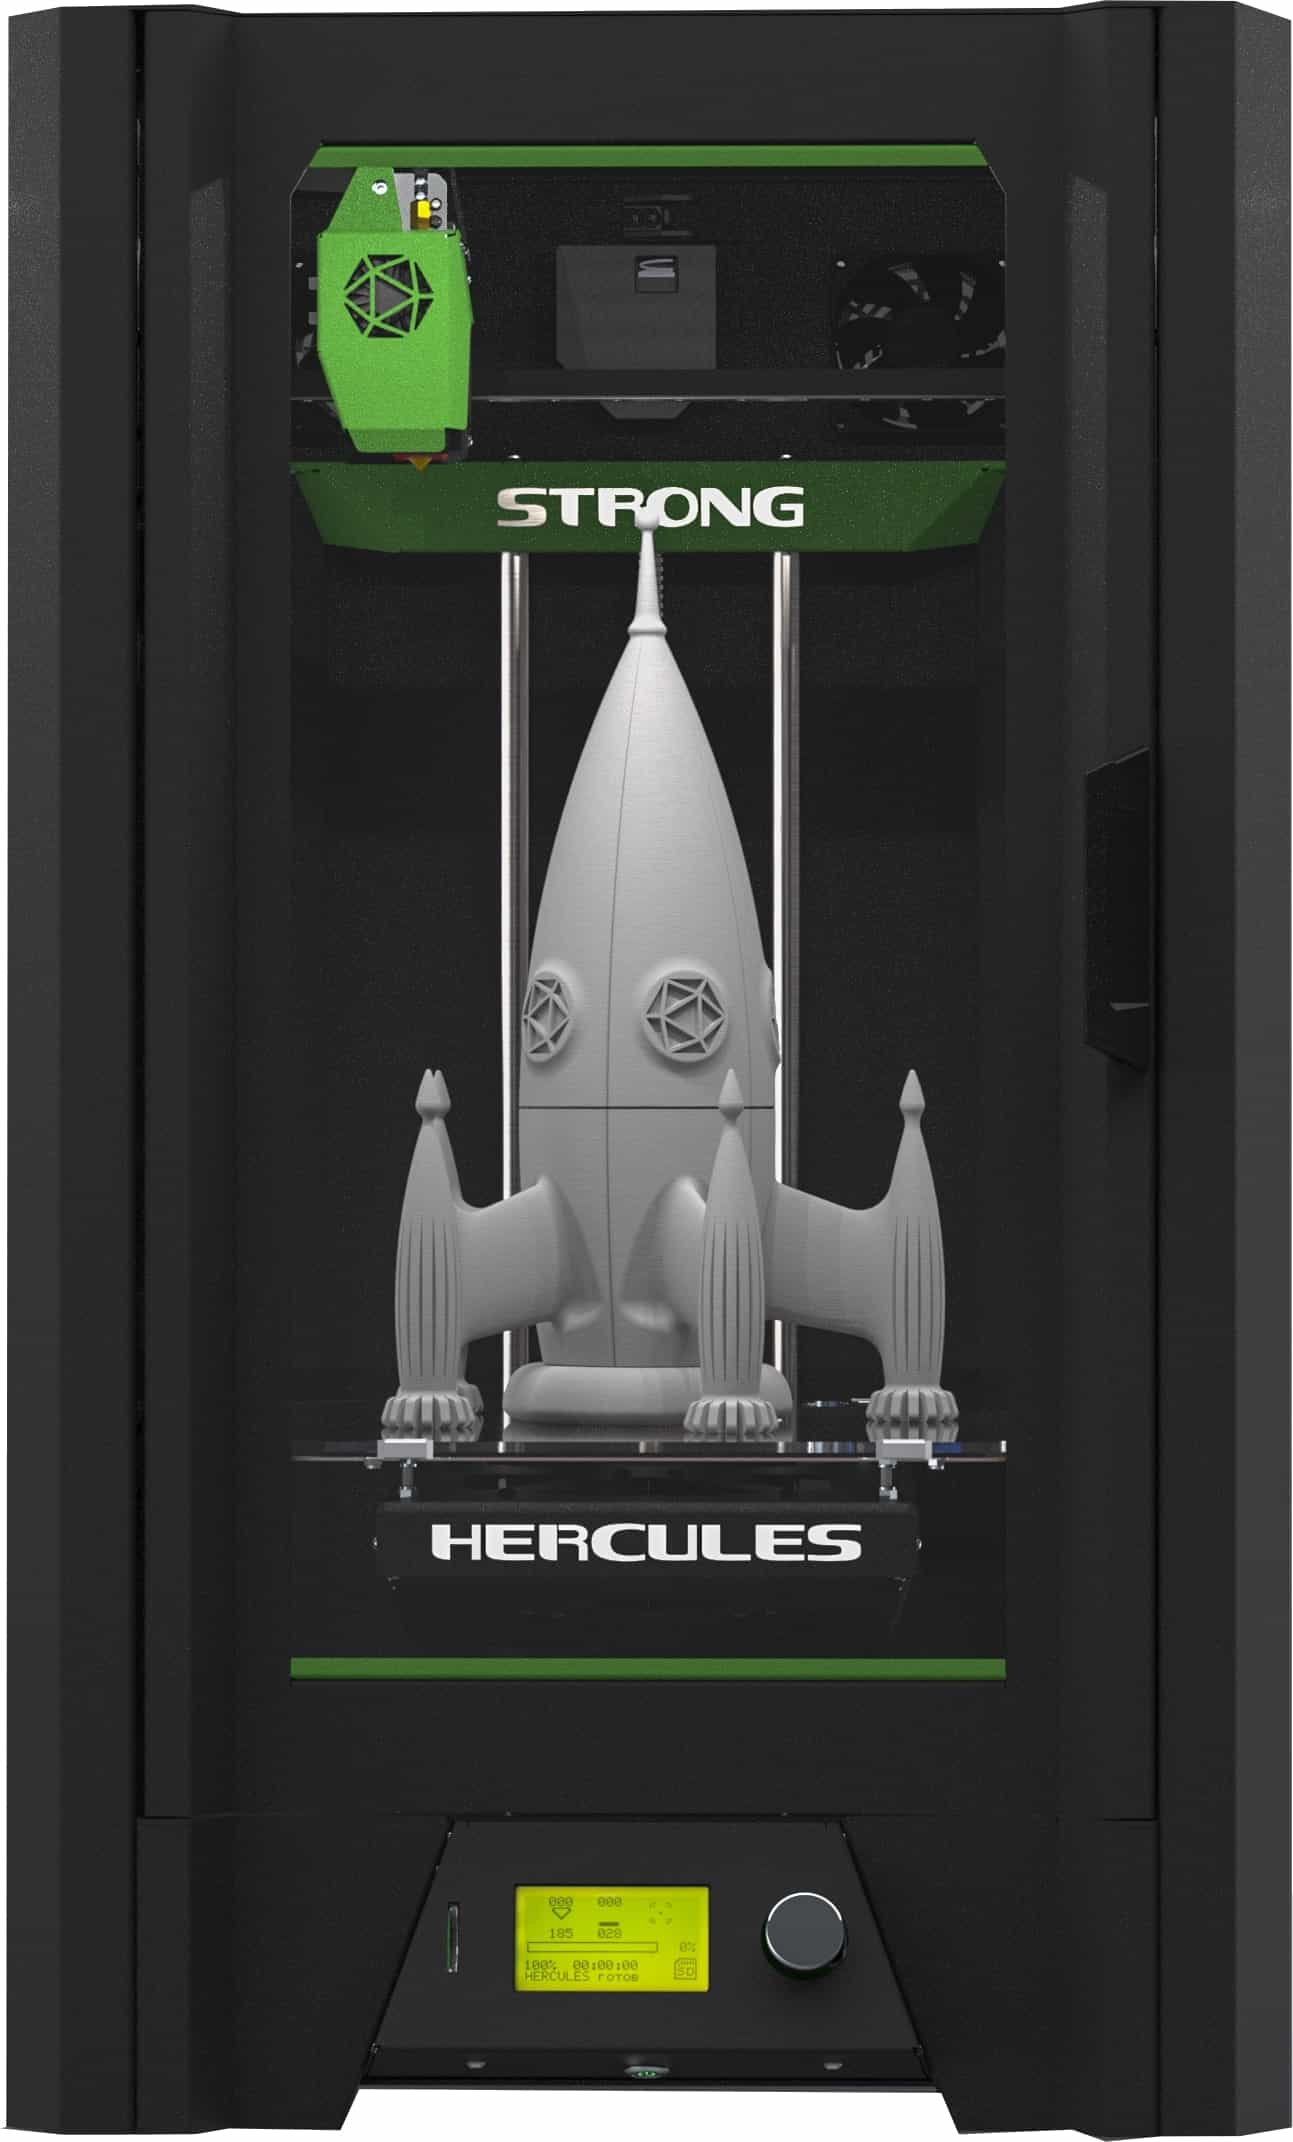 Фото 3D принтер Hercules Strong 2019